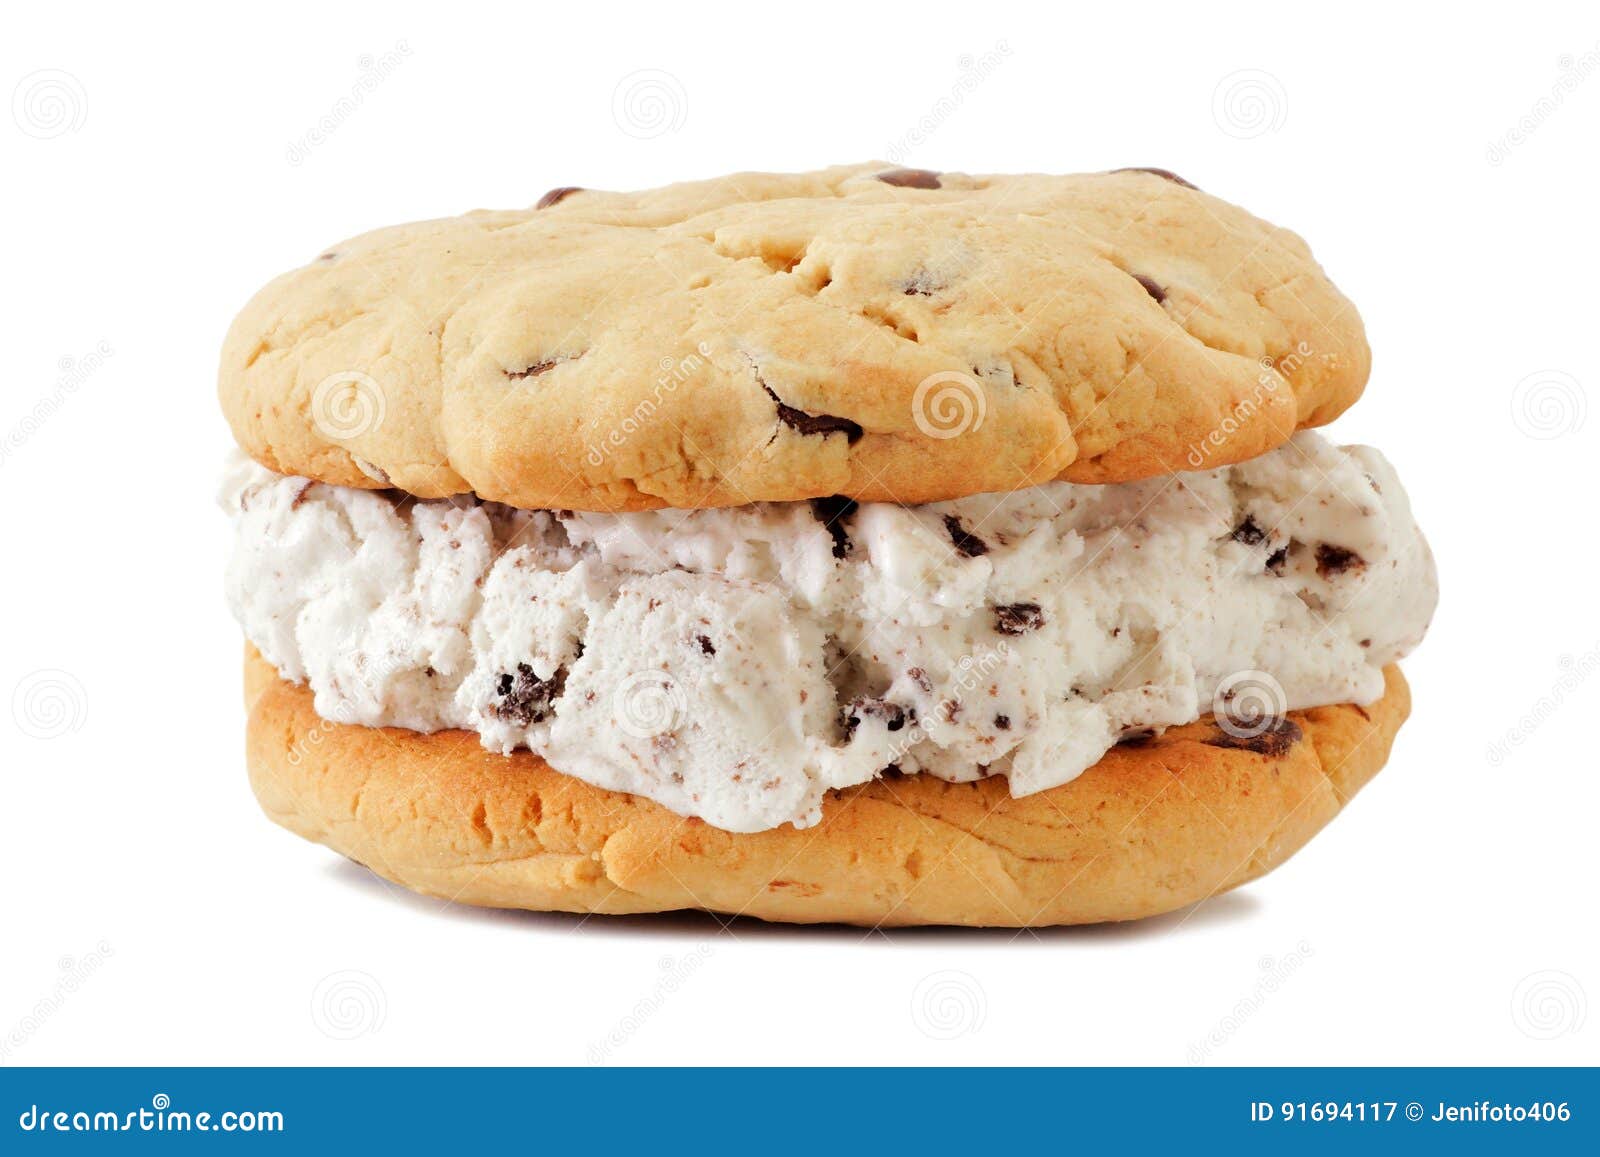 single ice cream sandwich  on white